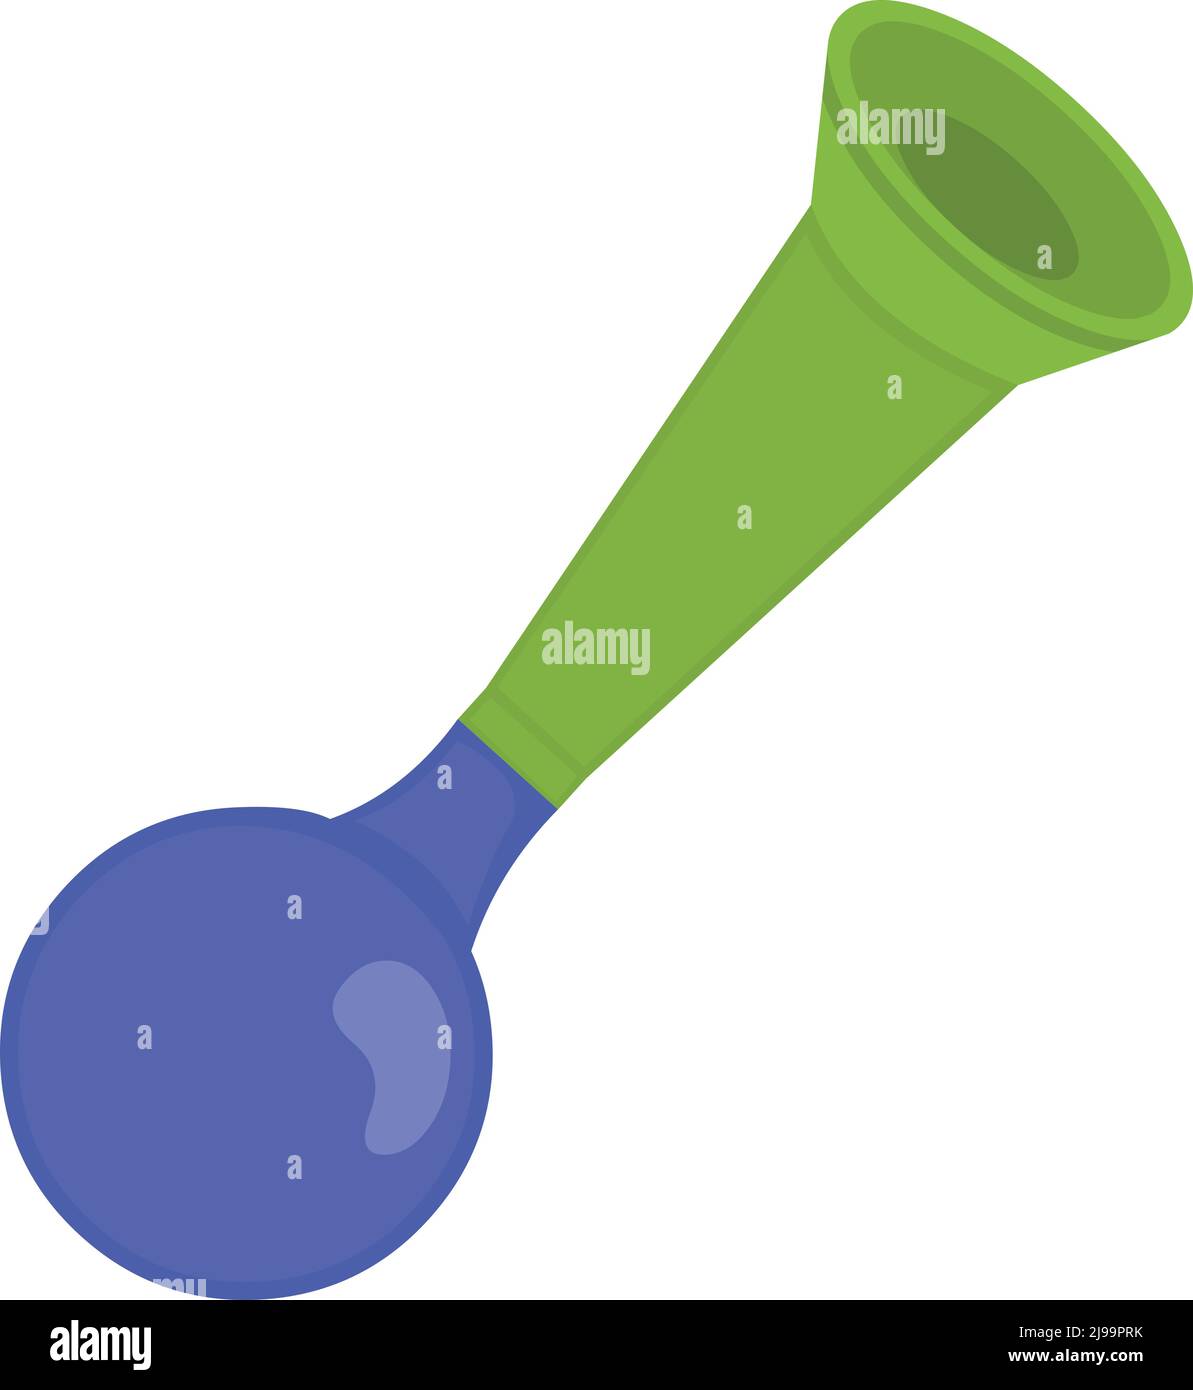 https://c8.alamy.com/comp/2J99PRK/vector-illustration-of-classic-clown-horn-bugle-2J99PRK.jpg